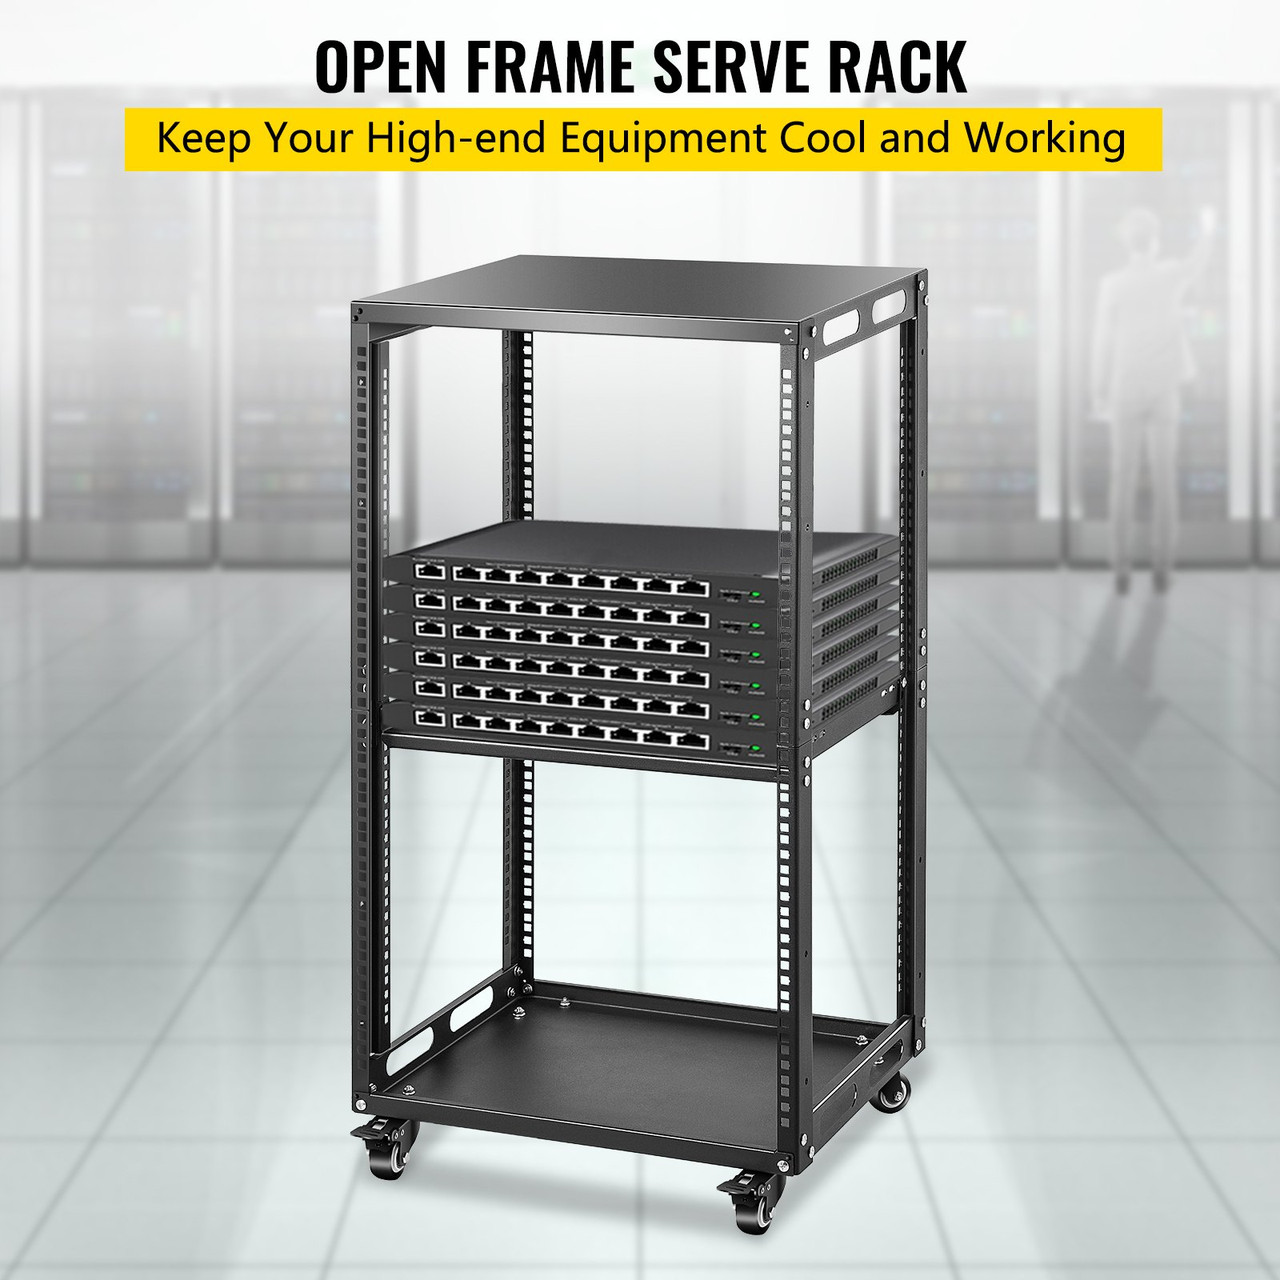 18U 19" Open Frame Rack, 4-Post IT Server Rack, Server/Audio Network Equipment Rack Cold Rolled Steel, Heavy Duty Rack Casters